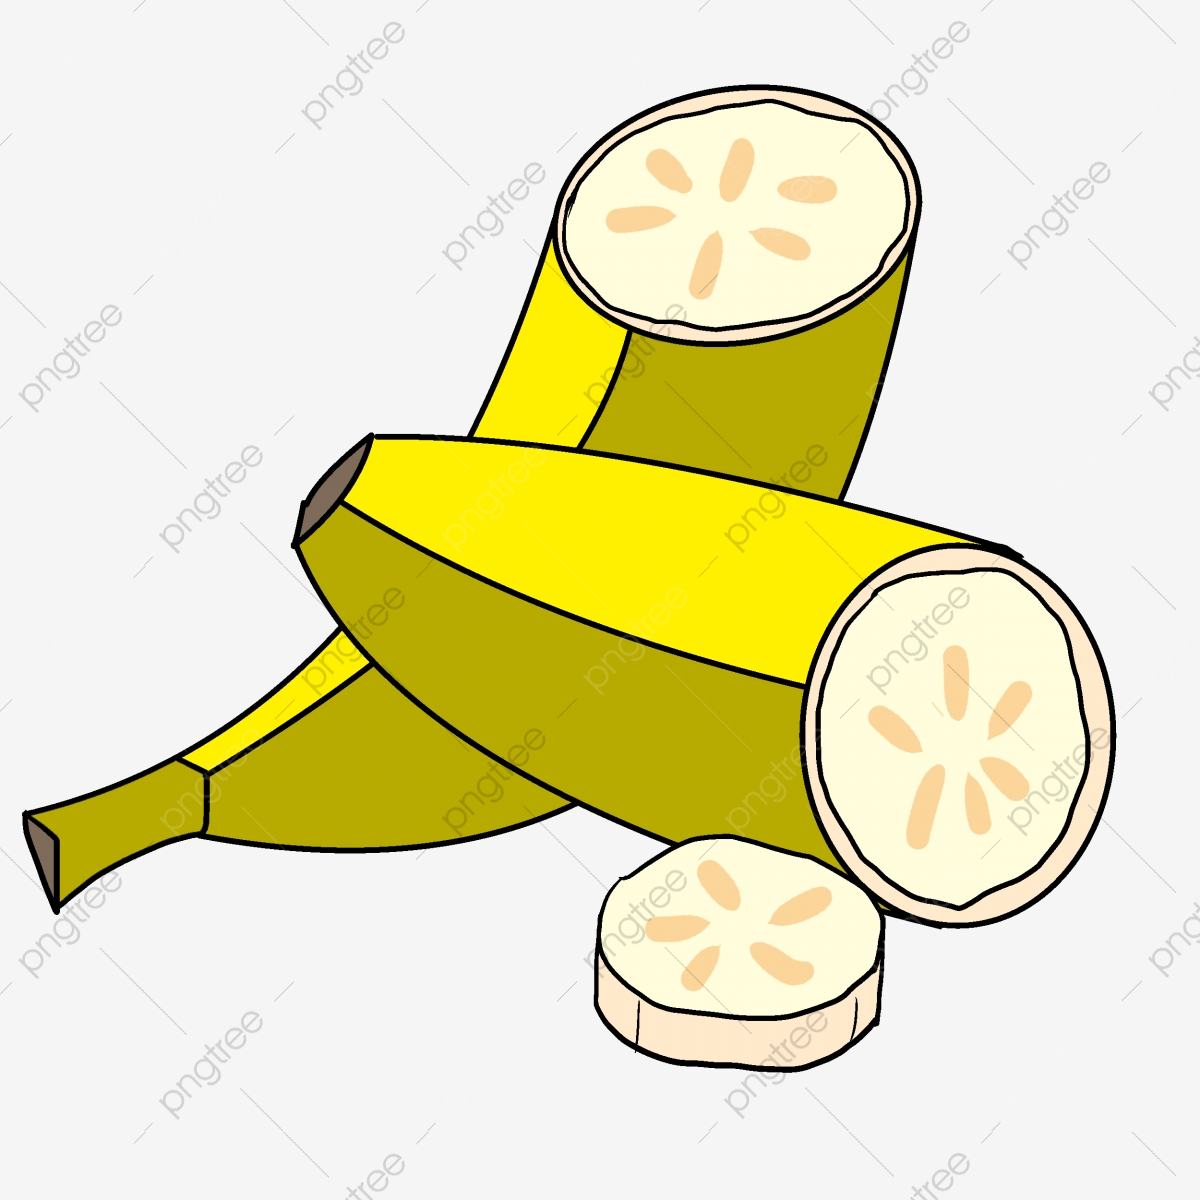 Clipart banana open. Yellow fruit illustration png